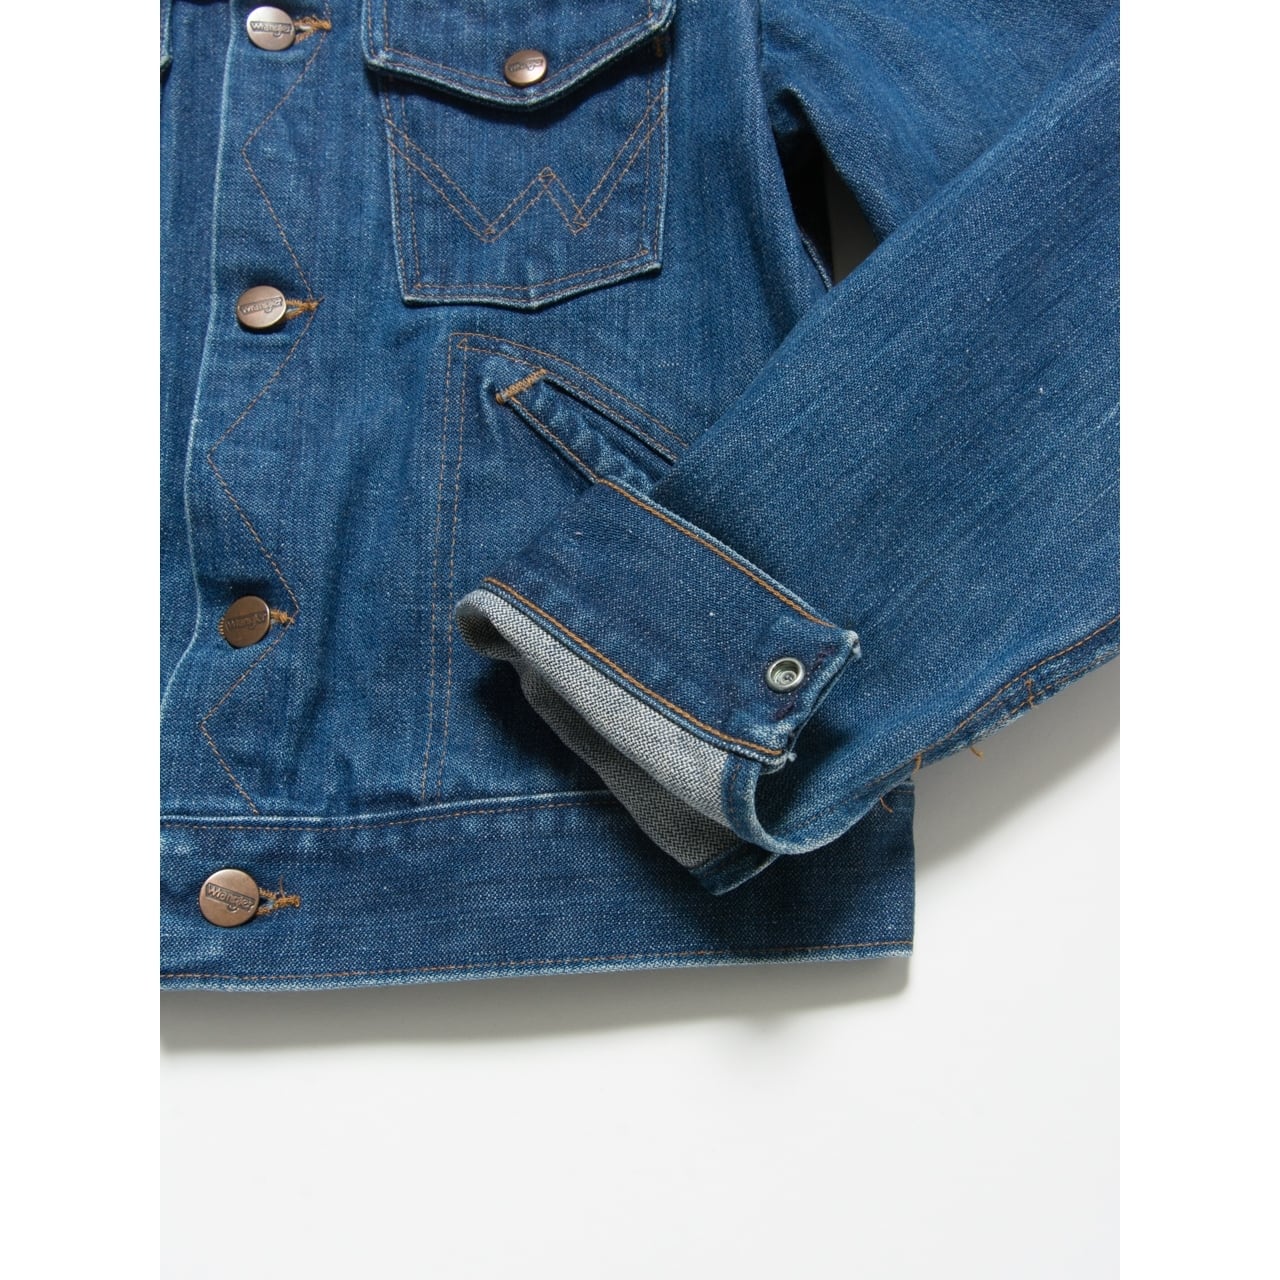 【Wrangler】Made in U.S.A. 80's 126MJ denim jacket（ラングラー アメリカ製デニムジャケット Gジャン）2b